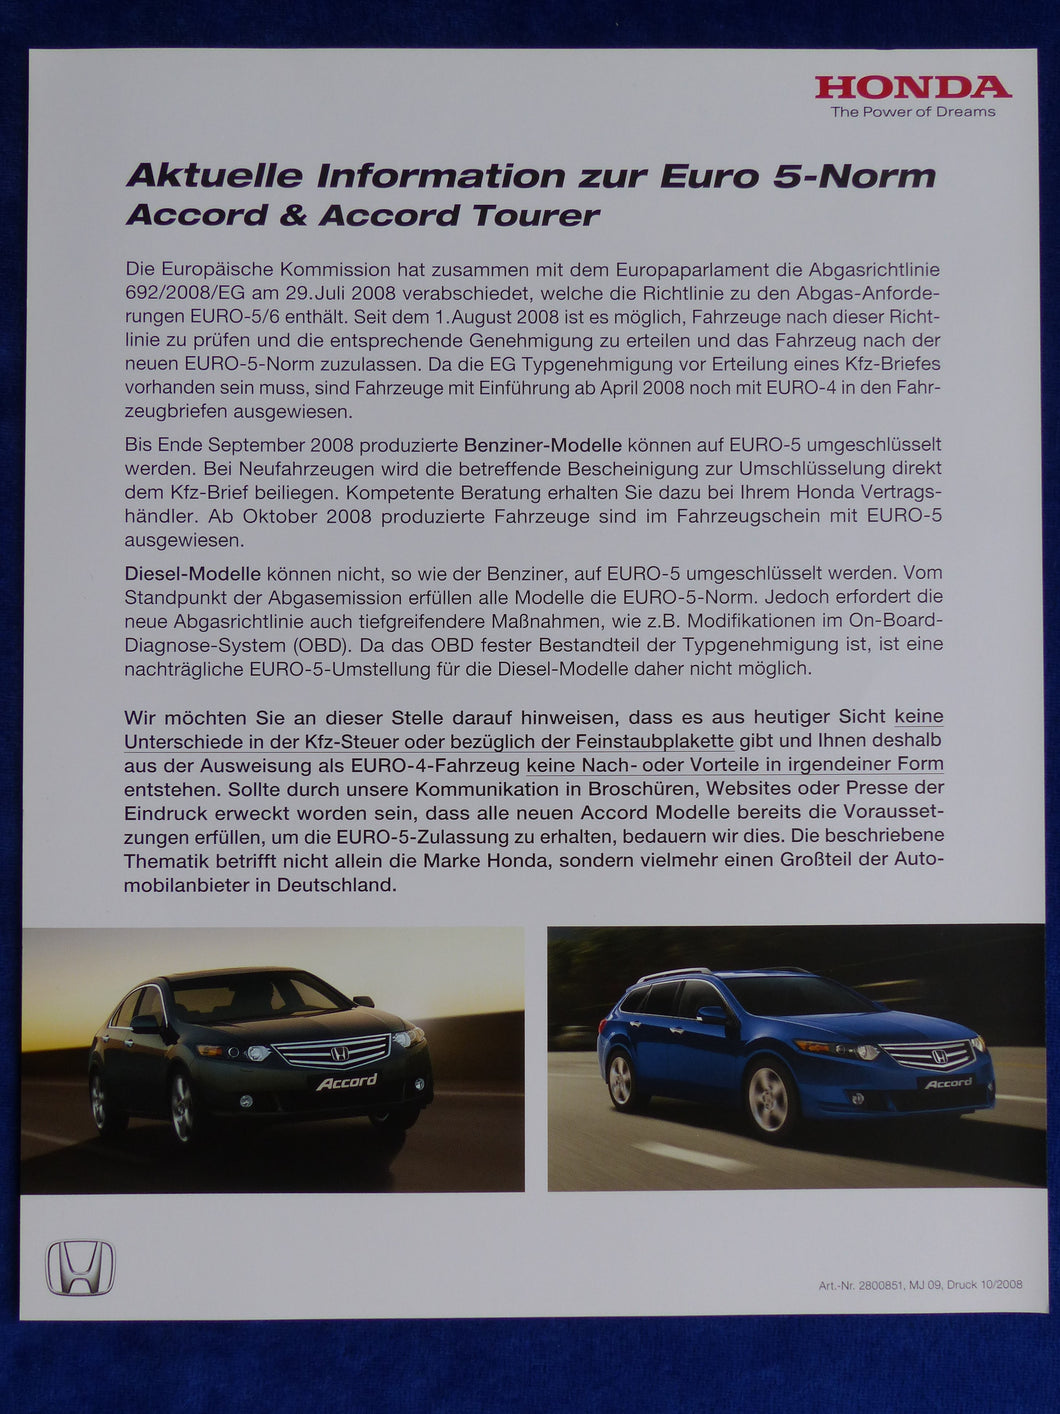 Honda Accord MJ 2009 - Information zur Euro 5-Norm - Prospekt Brochure 10.2008